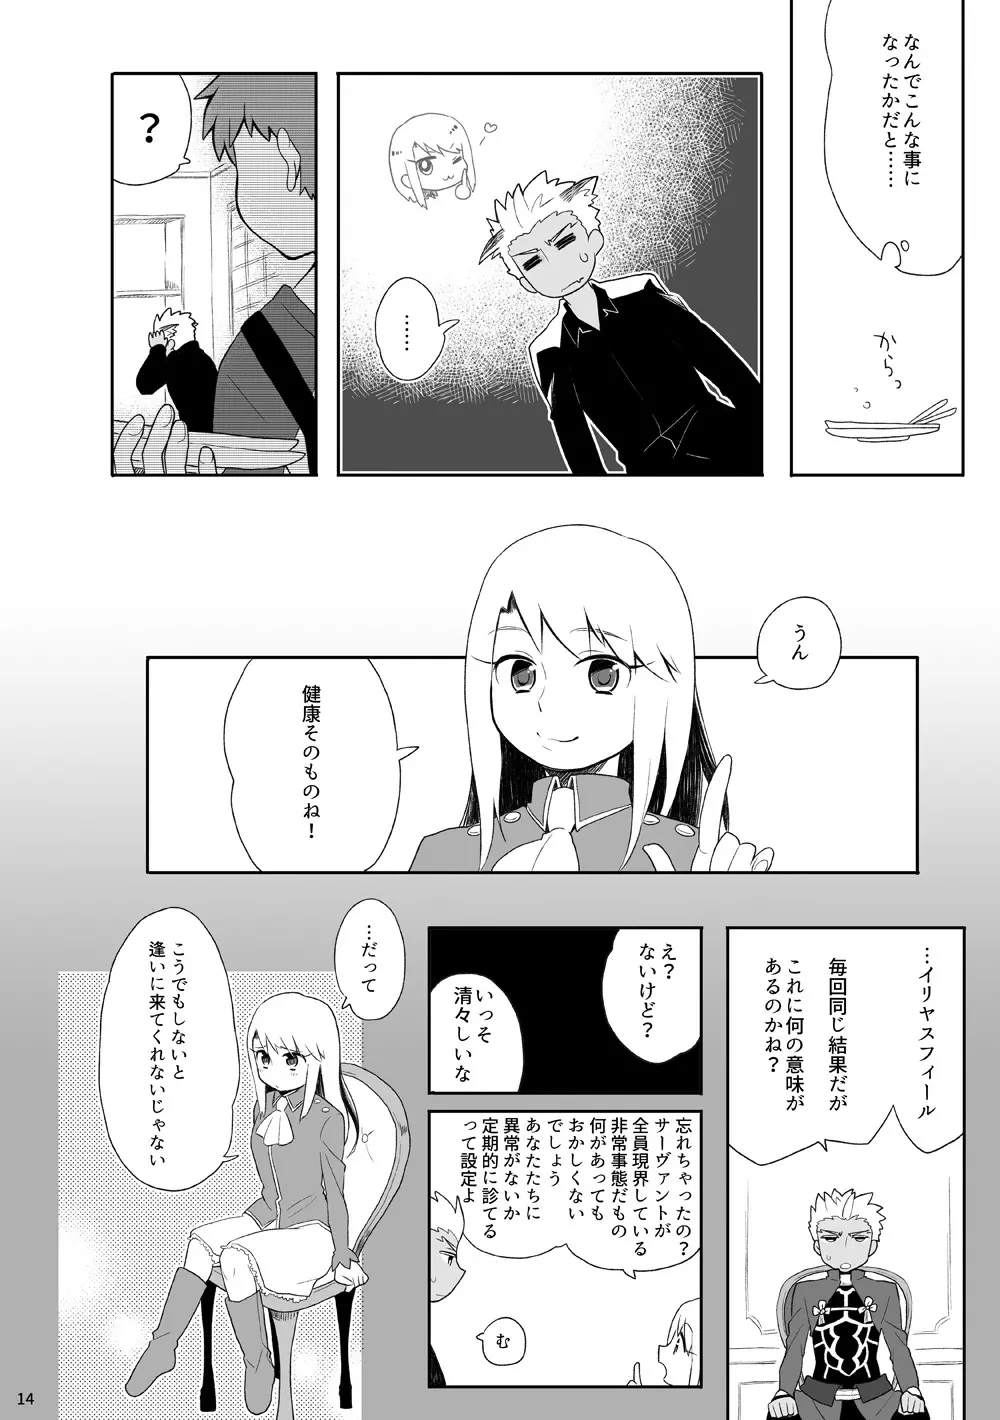 弓士本 - page13